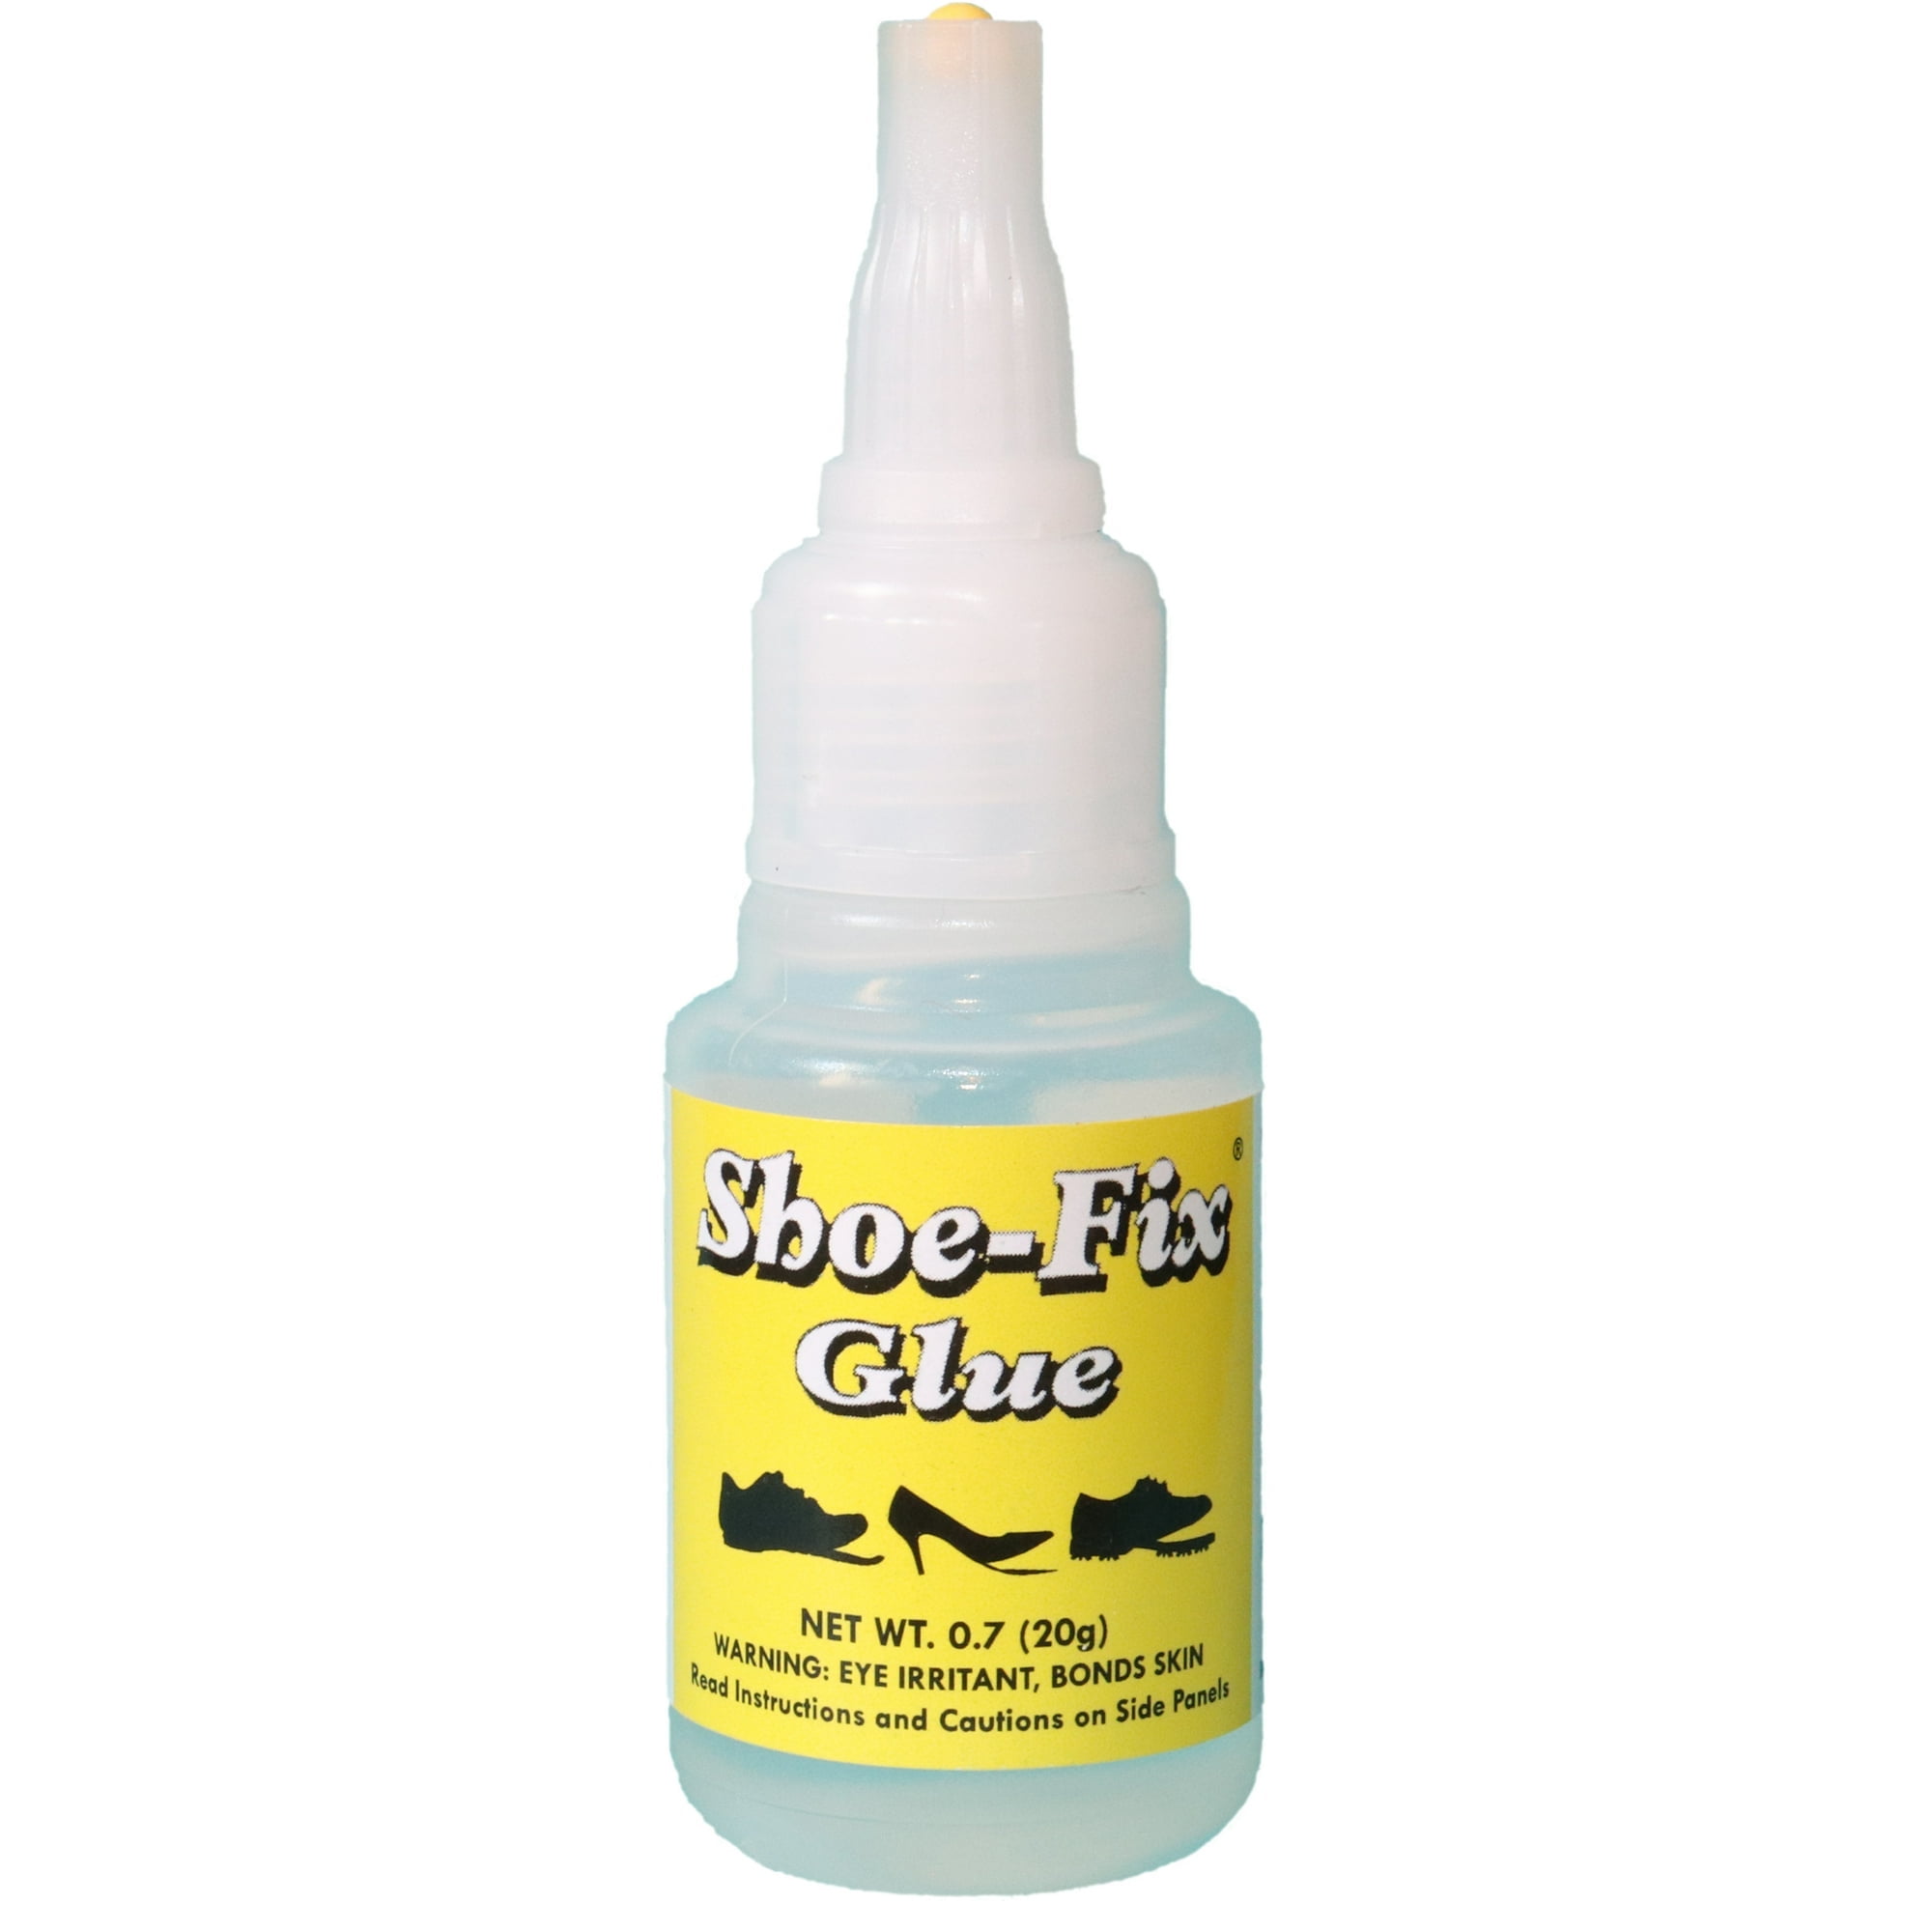 Shoe-Fix Glue Professional Grade - Easy to Use Glue, Flexible Bond